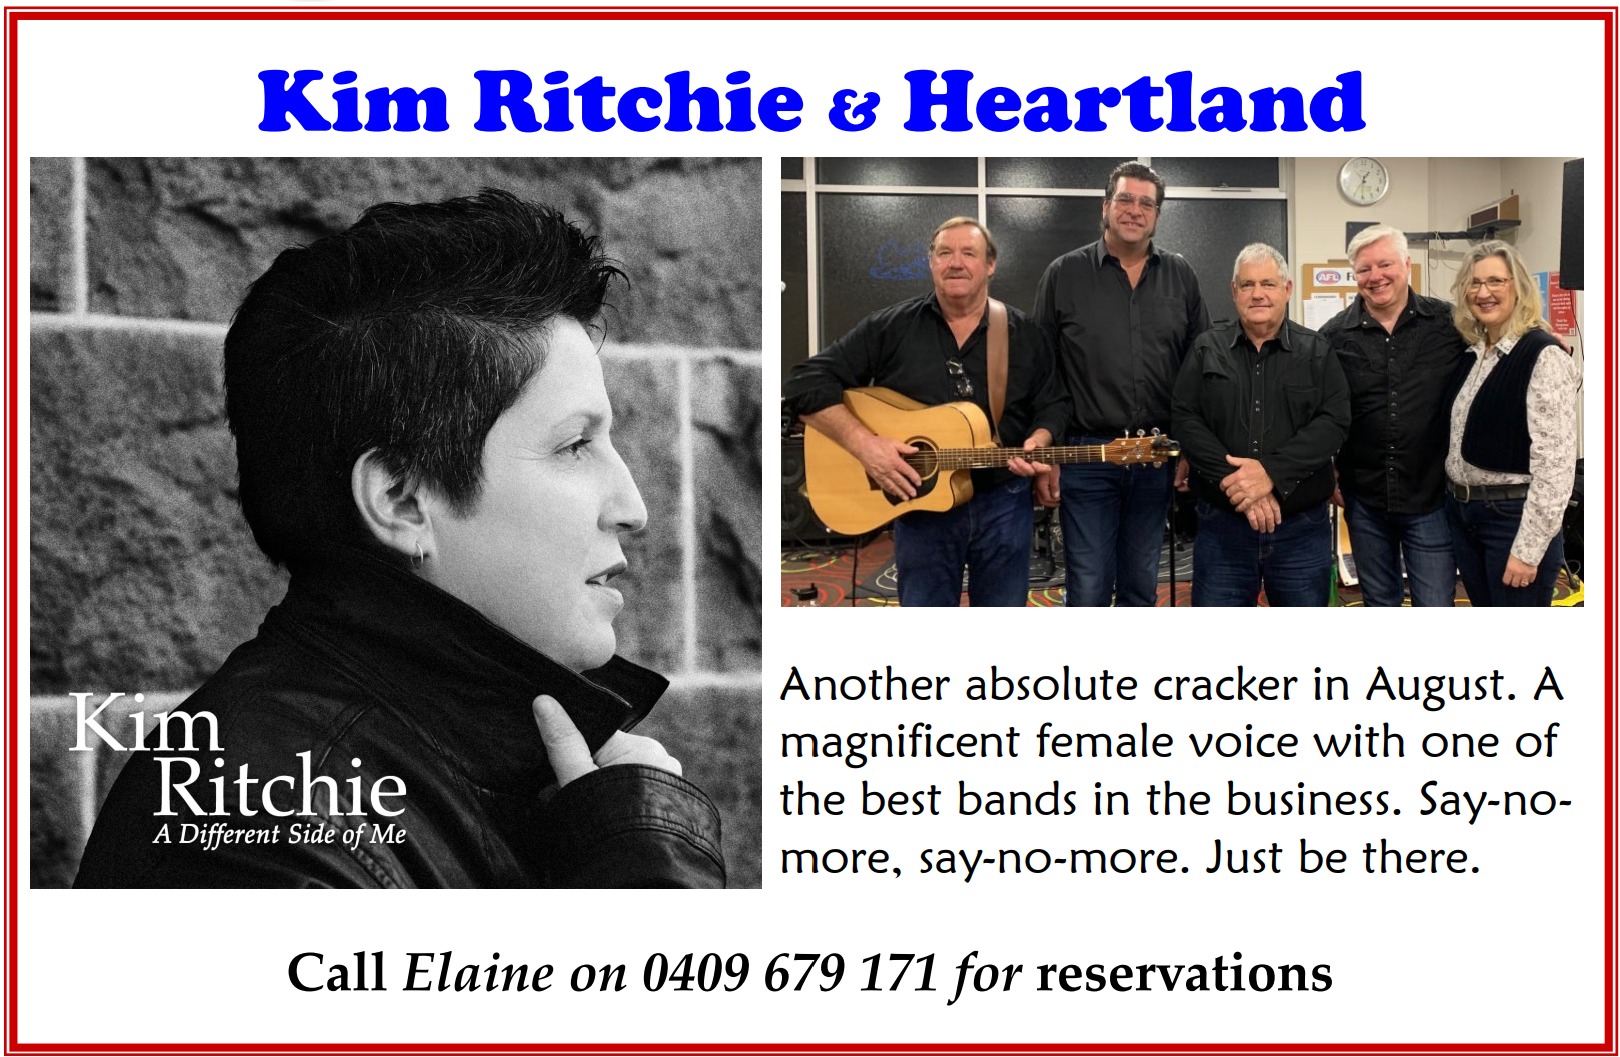 Kim Ritchie with Heartland